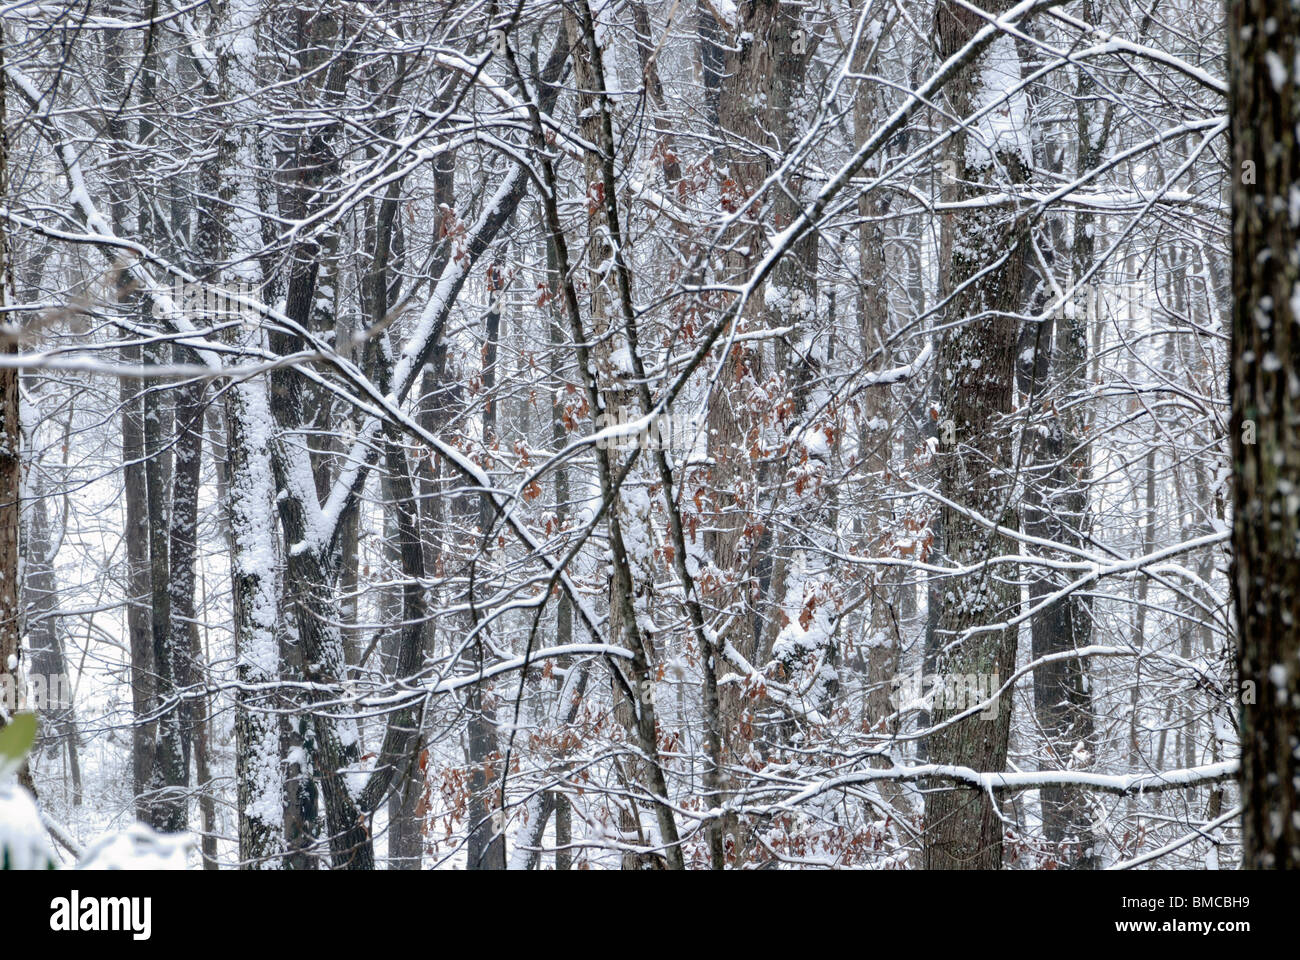 hardwood trees in winter, Northwest Georgia, USA Stock Photo